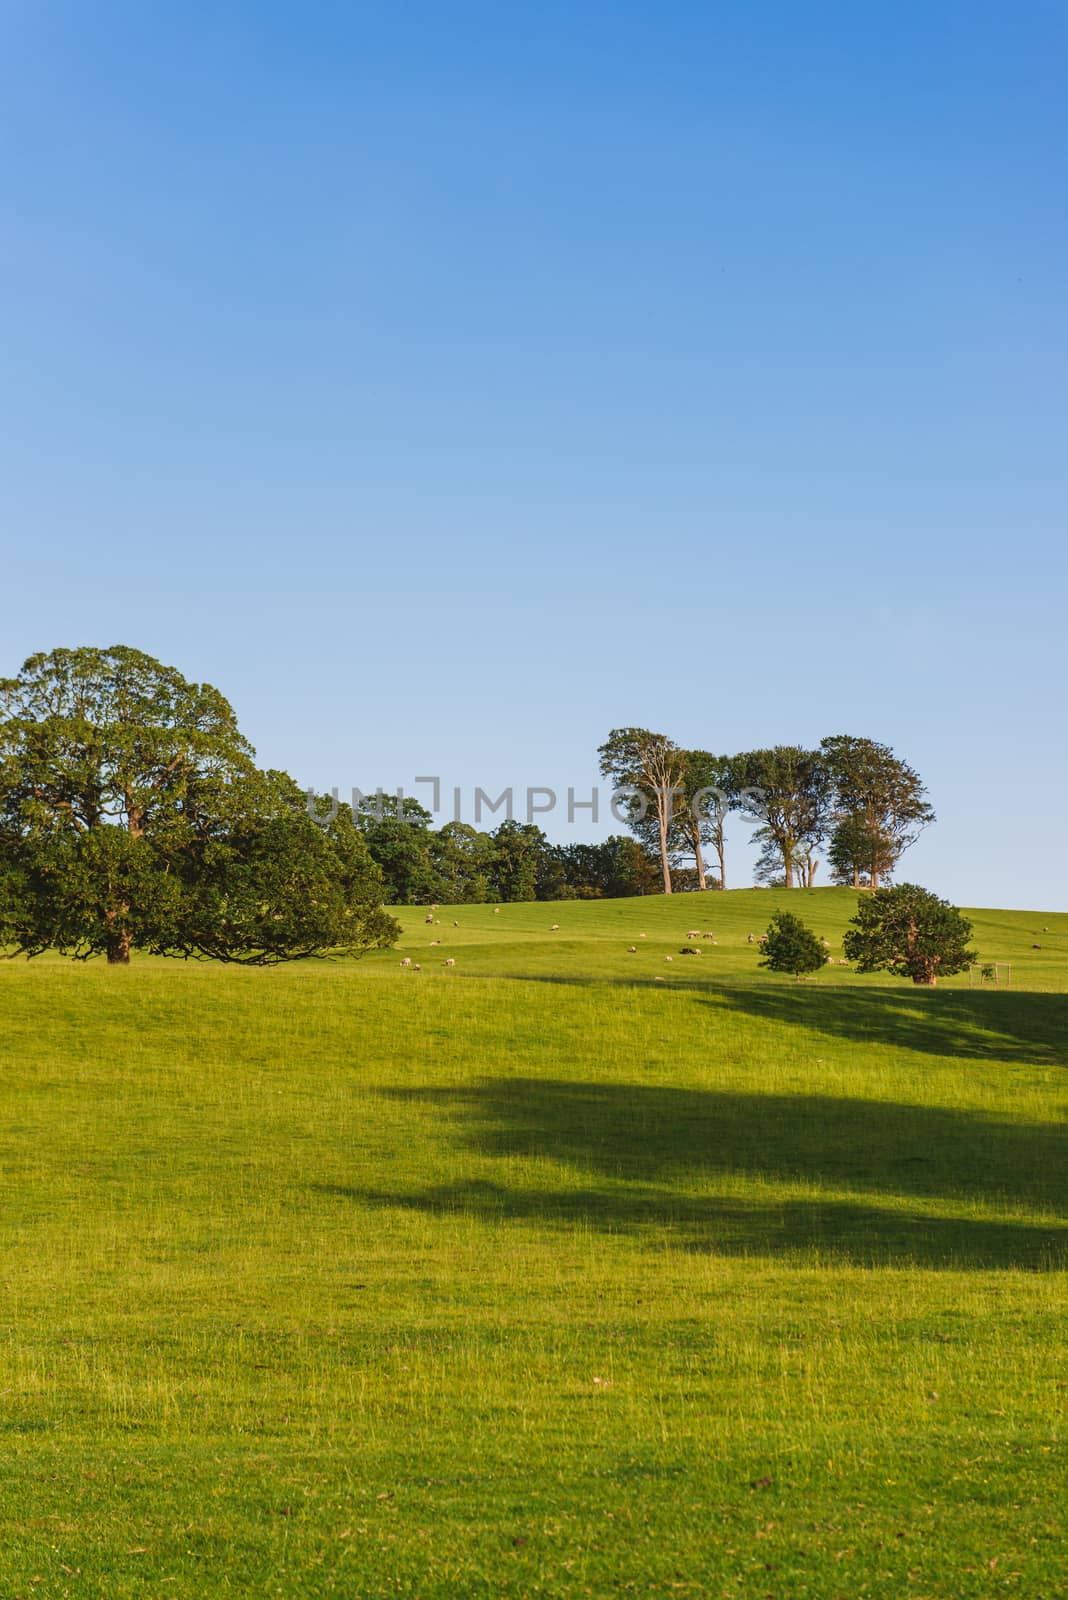 The open parkland of Dallam Park on a sunny evening Milnthorpe, Cumbria, England by paddythegolfer